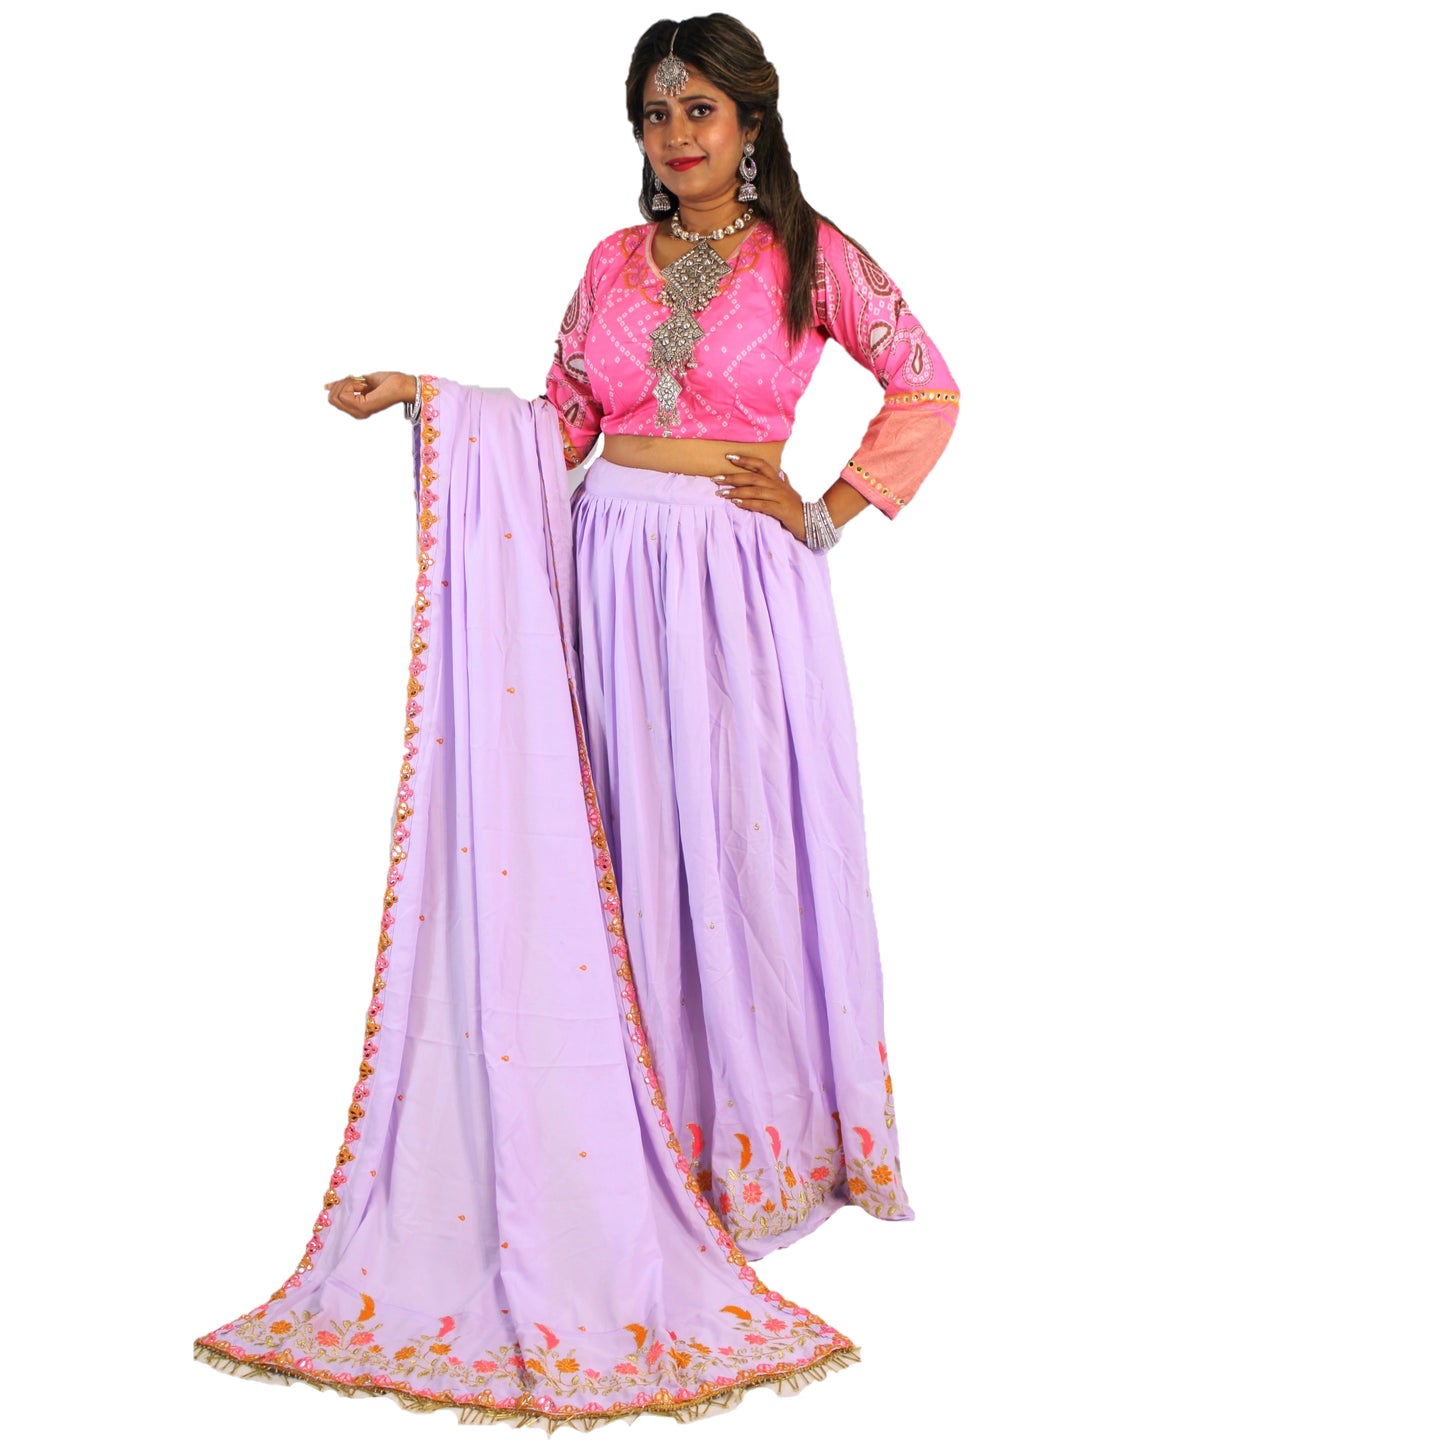 Maharani's Soft Silk Lehenga - Pink and Light Purple